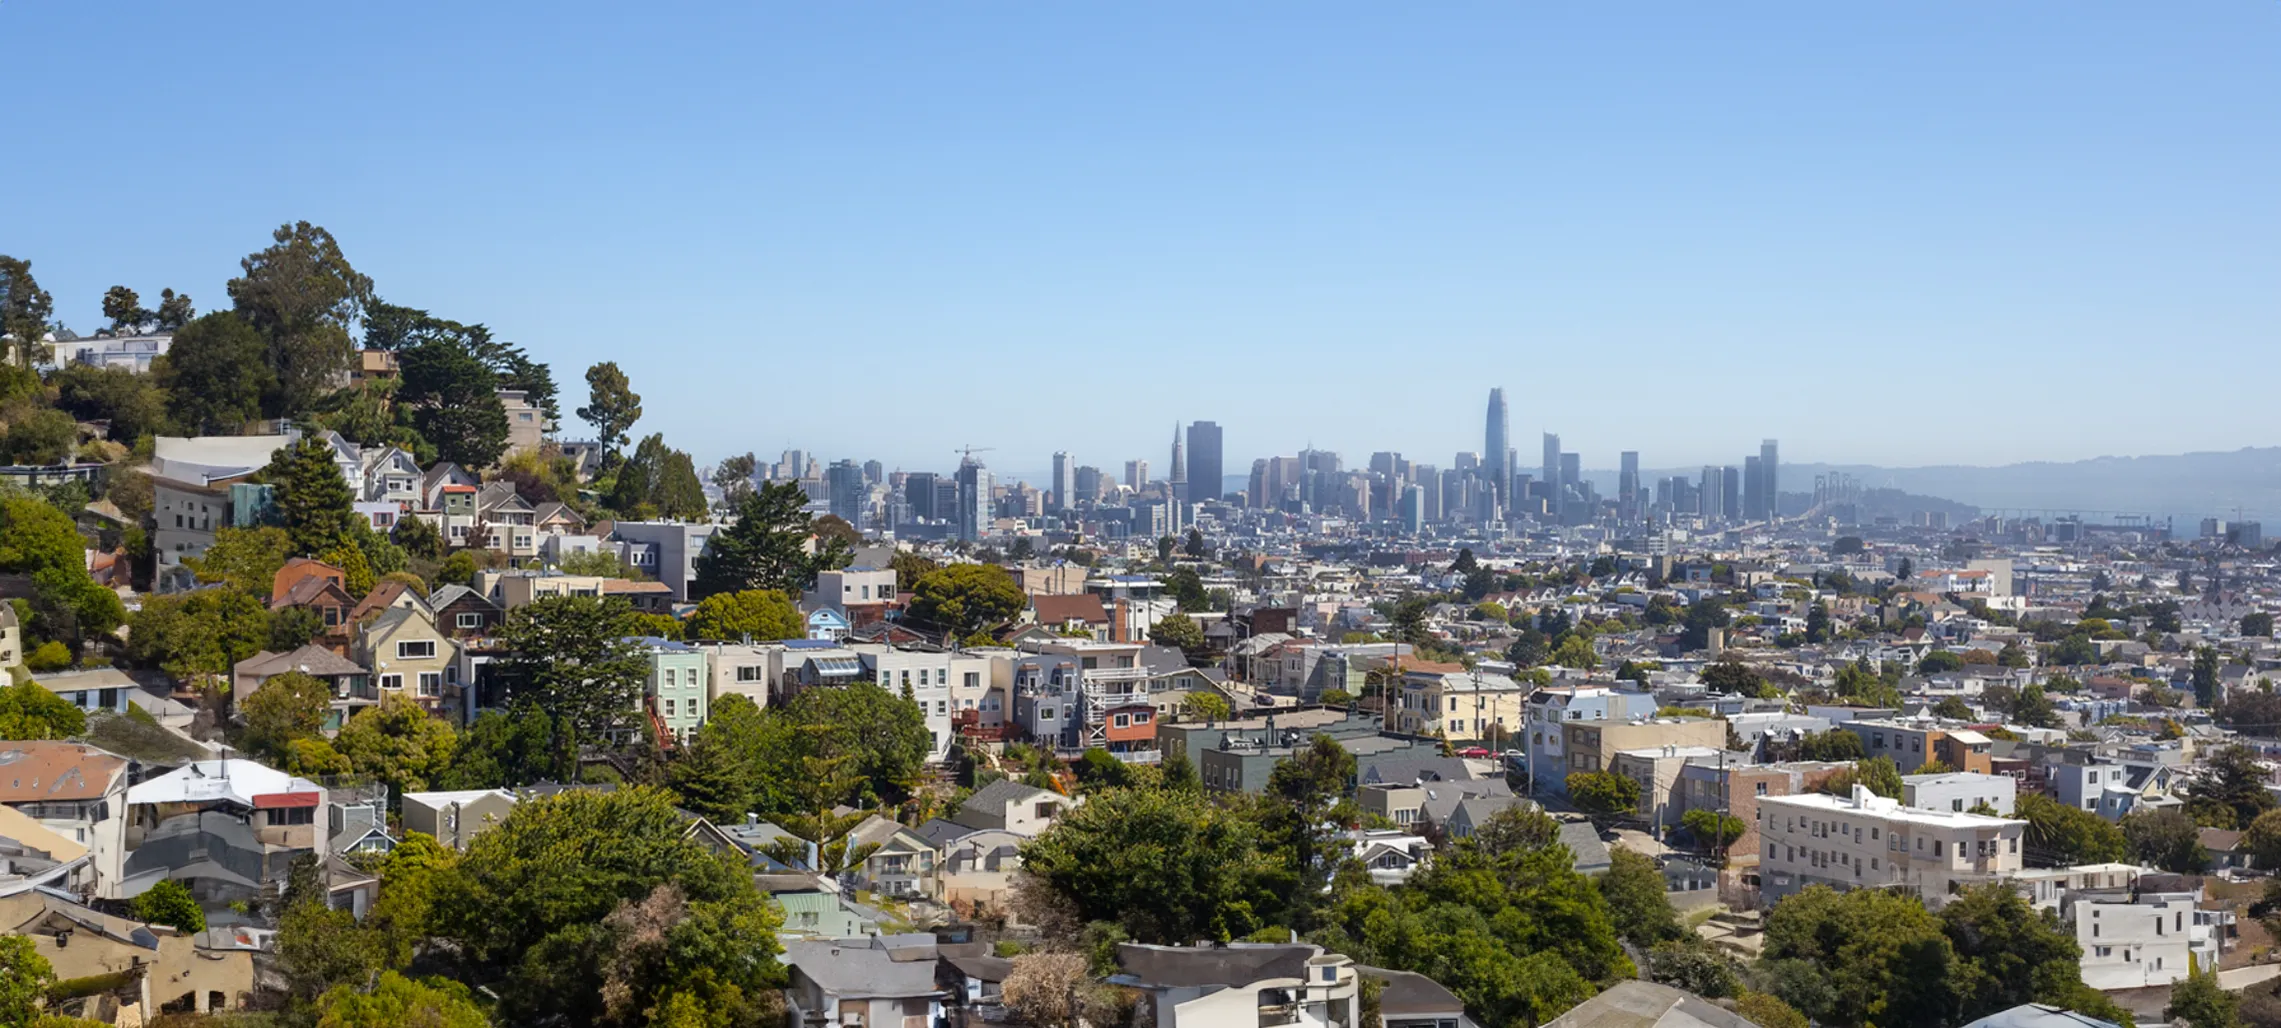 The skyline of San Francisco.